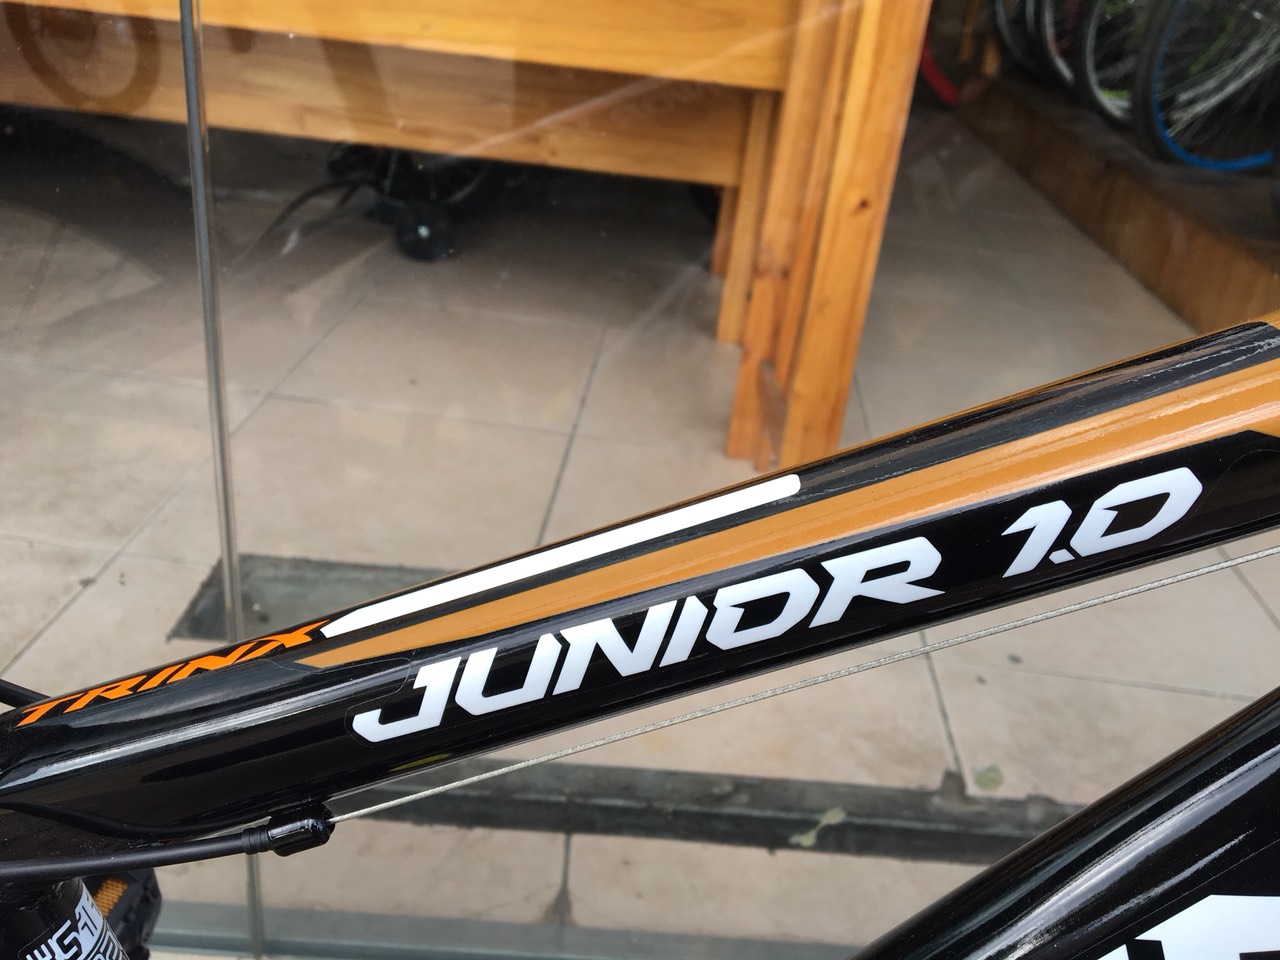 Xe đạp trẻ em TRINX JUNIOR1.0 2019 Black White Orange 